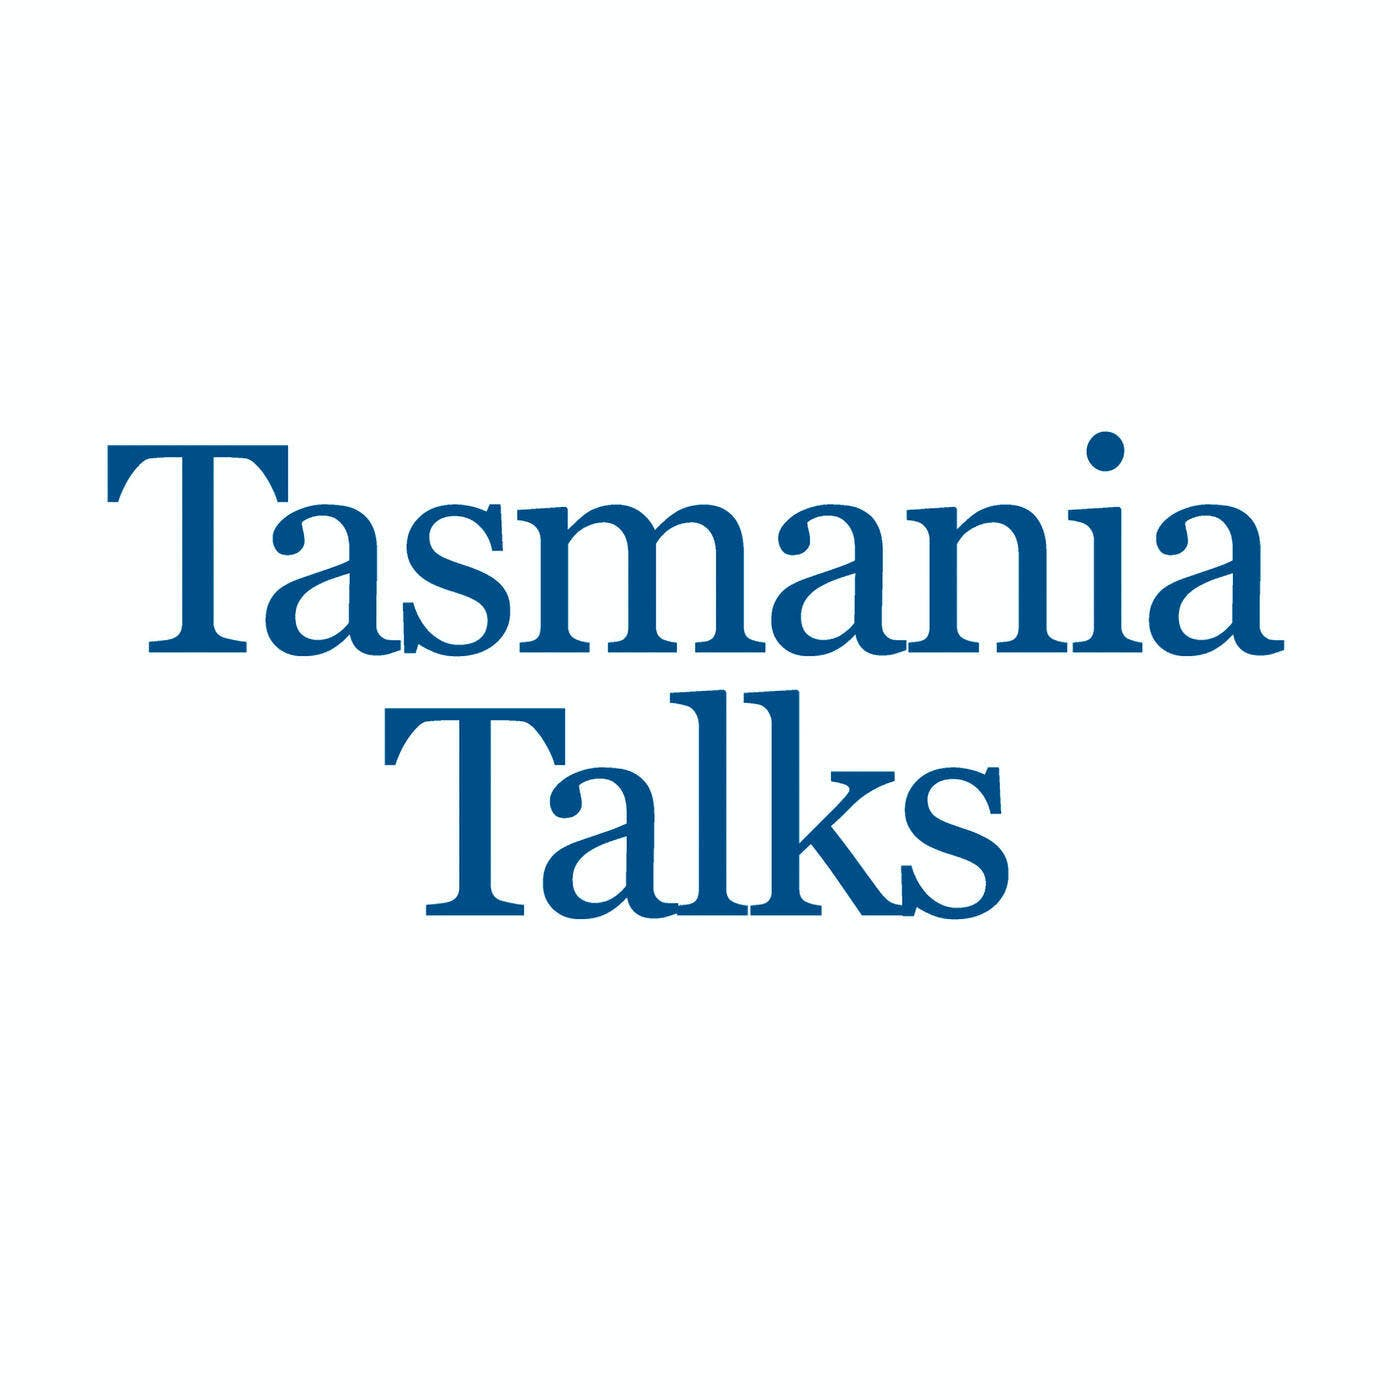 Simon Want, Tasmanian Chair of Housing All Australians